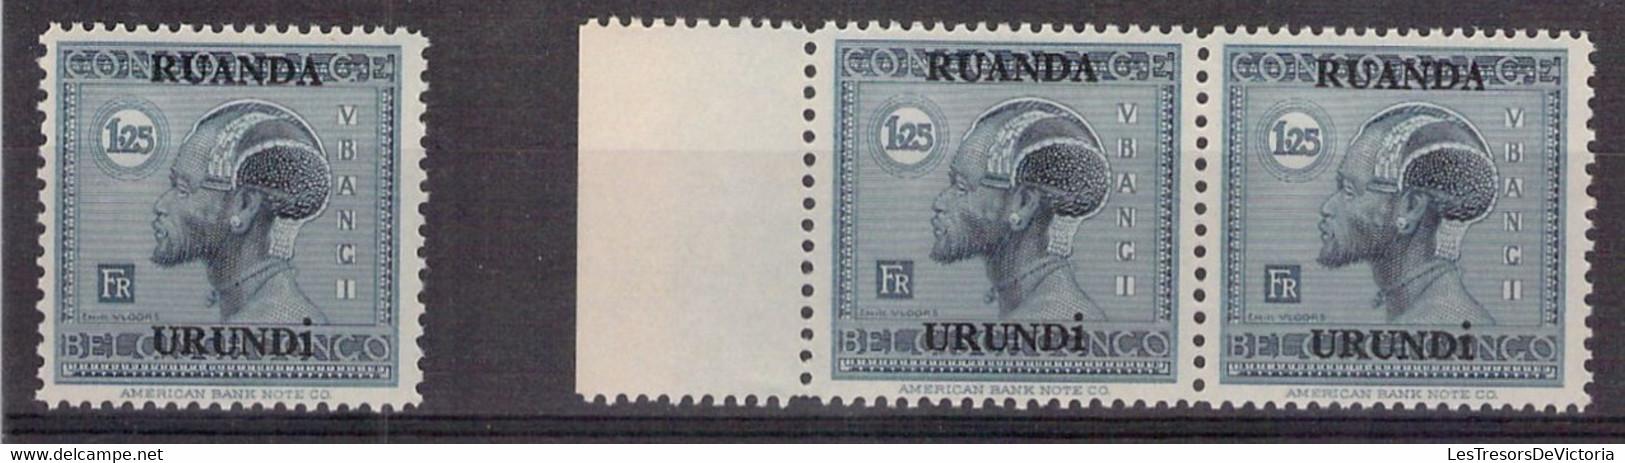 Ruanda Urundi - Lot De 11 COB 73 **MNH 1.25 Bleu Pale - 1925 - Cote 33 COB 2022 - Neufs